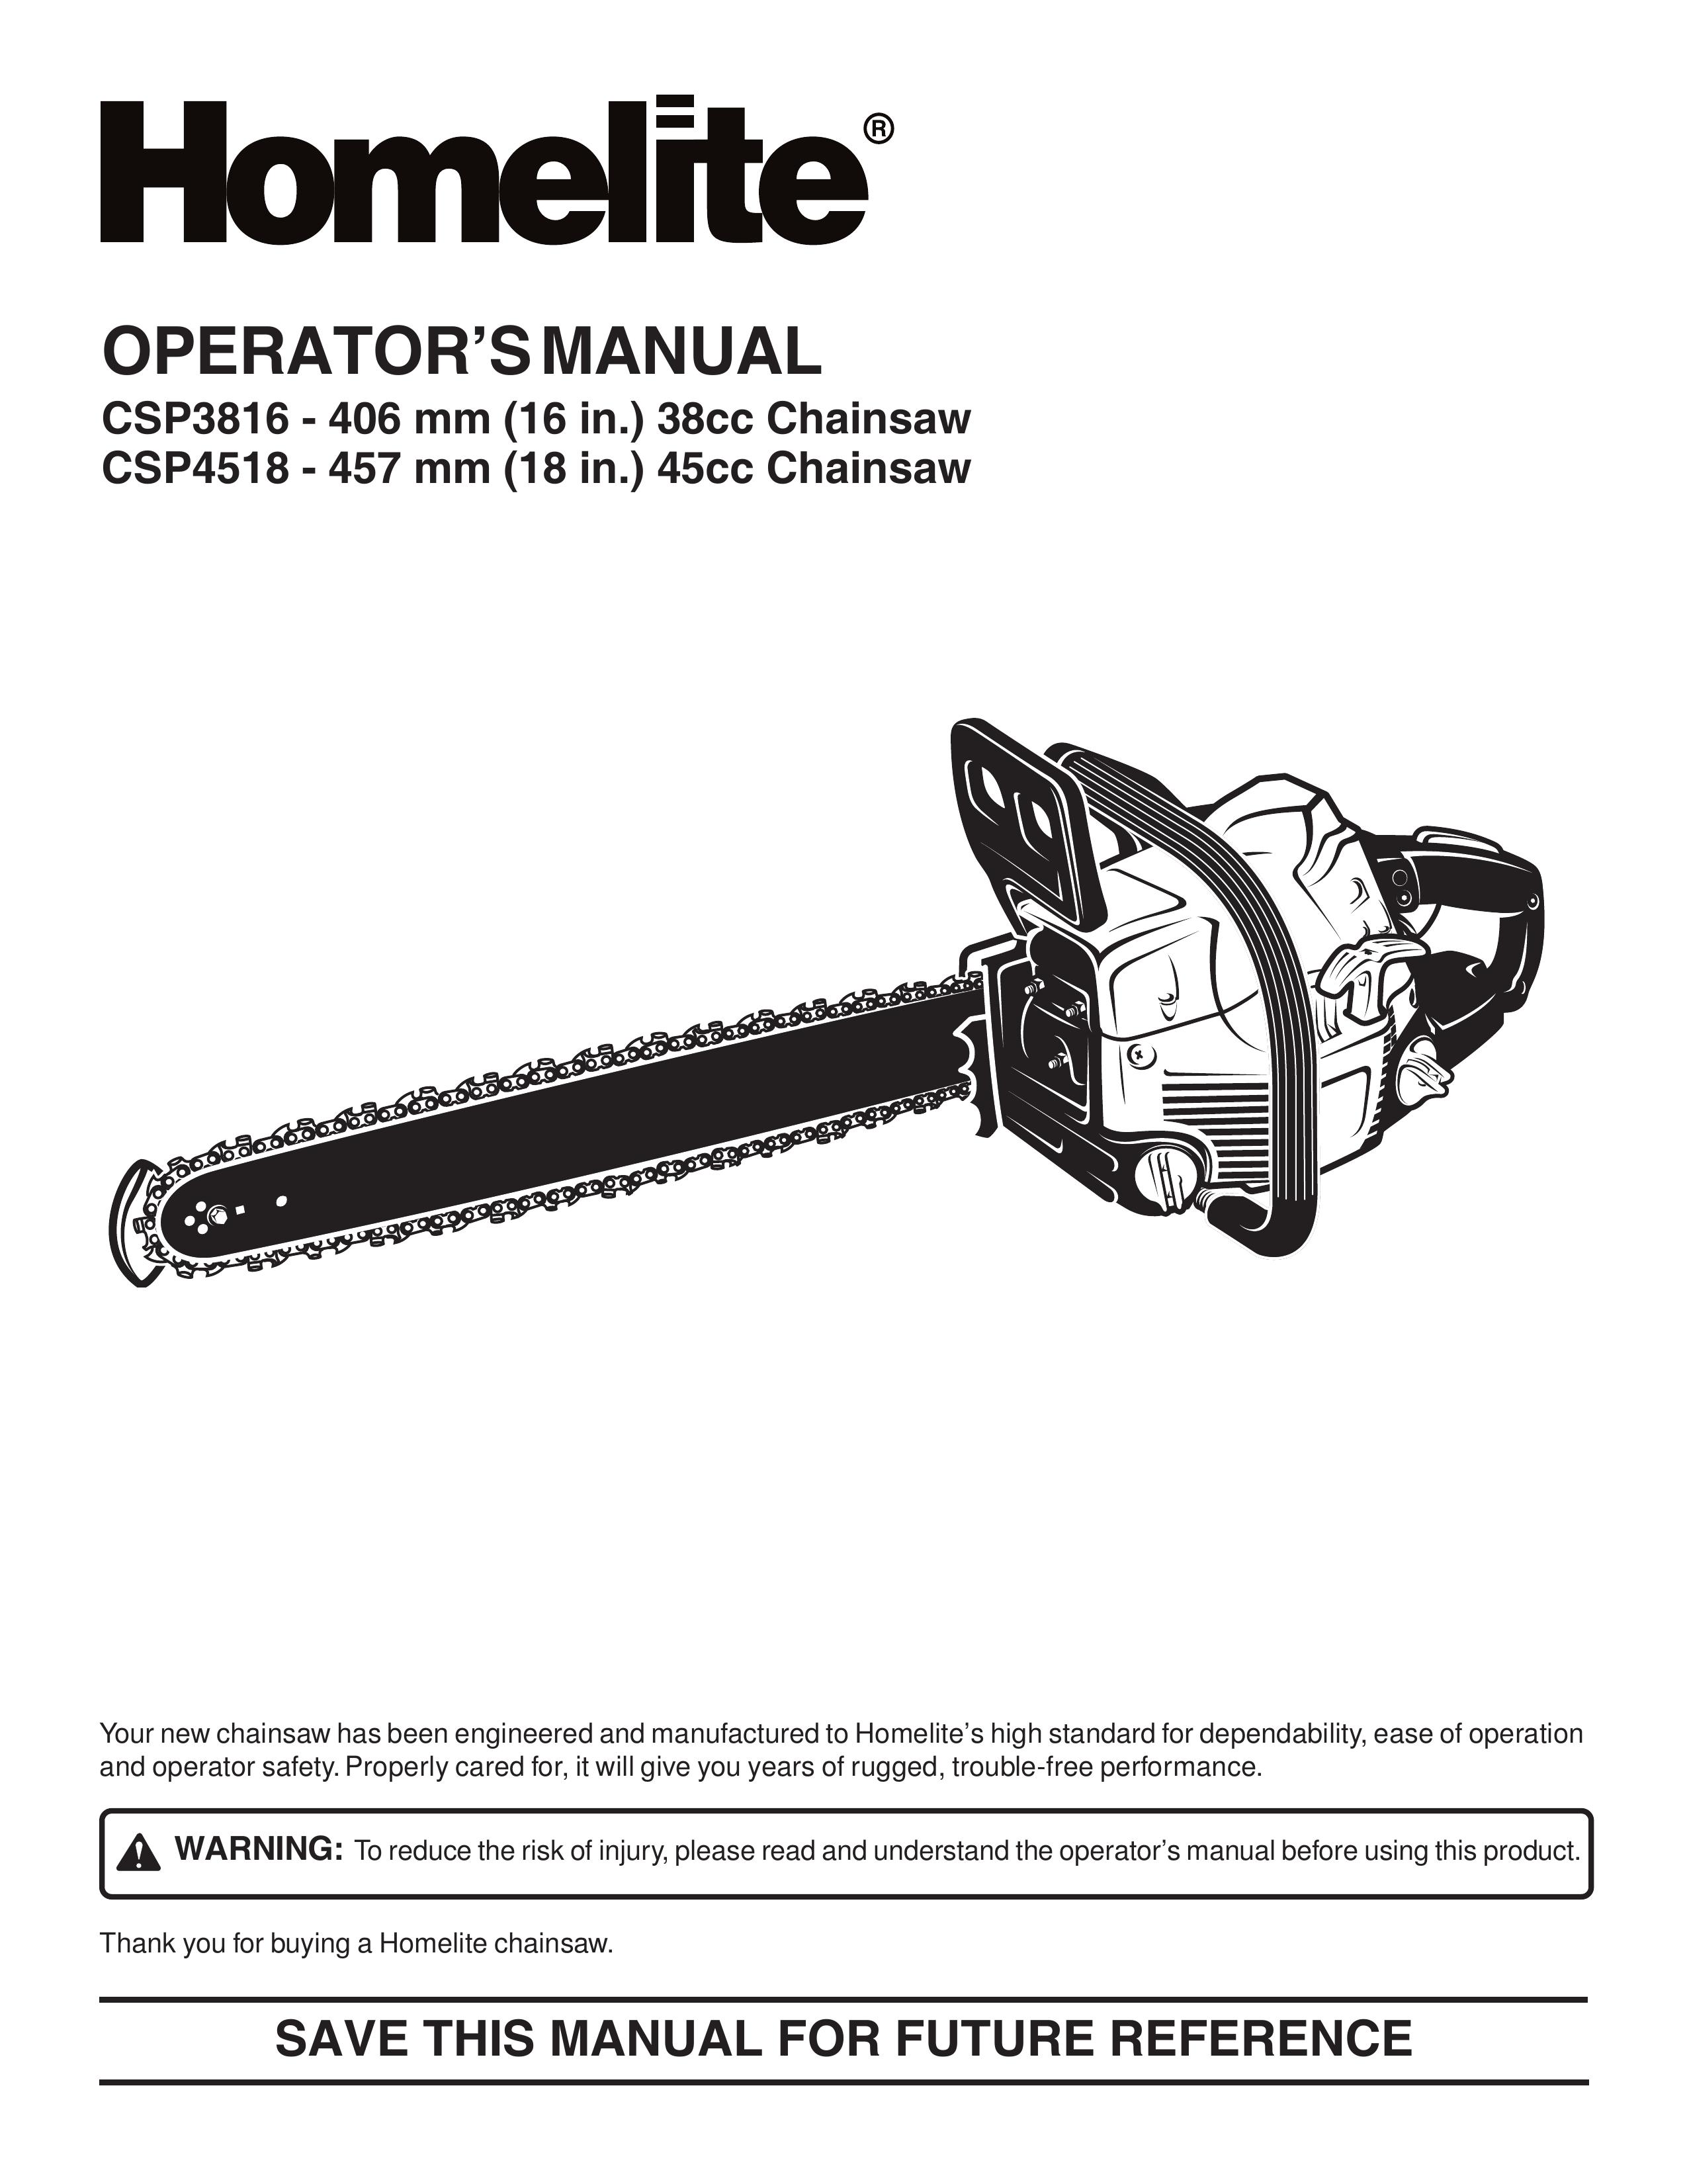 Homelite CSP4518 Chainsaw User Manual